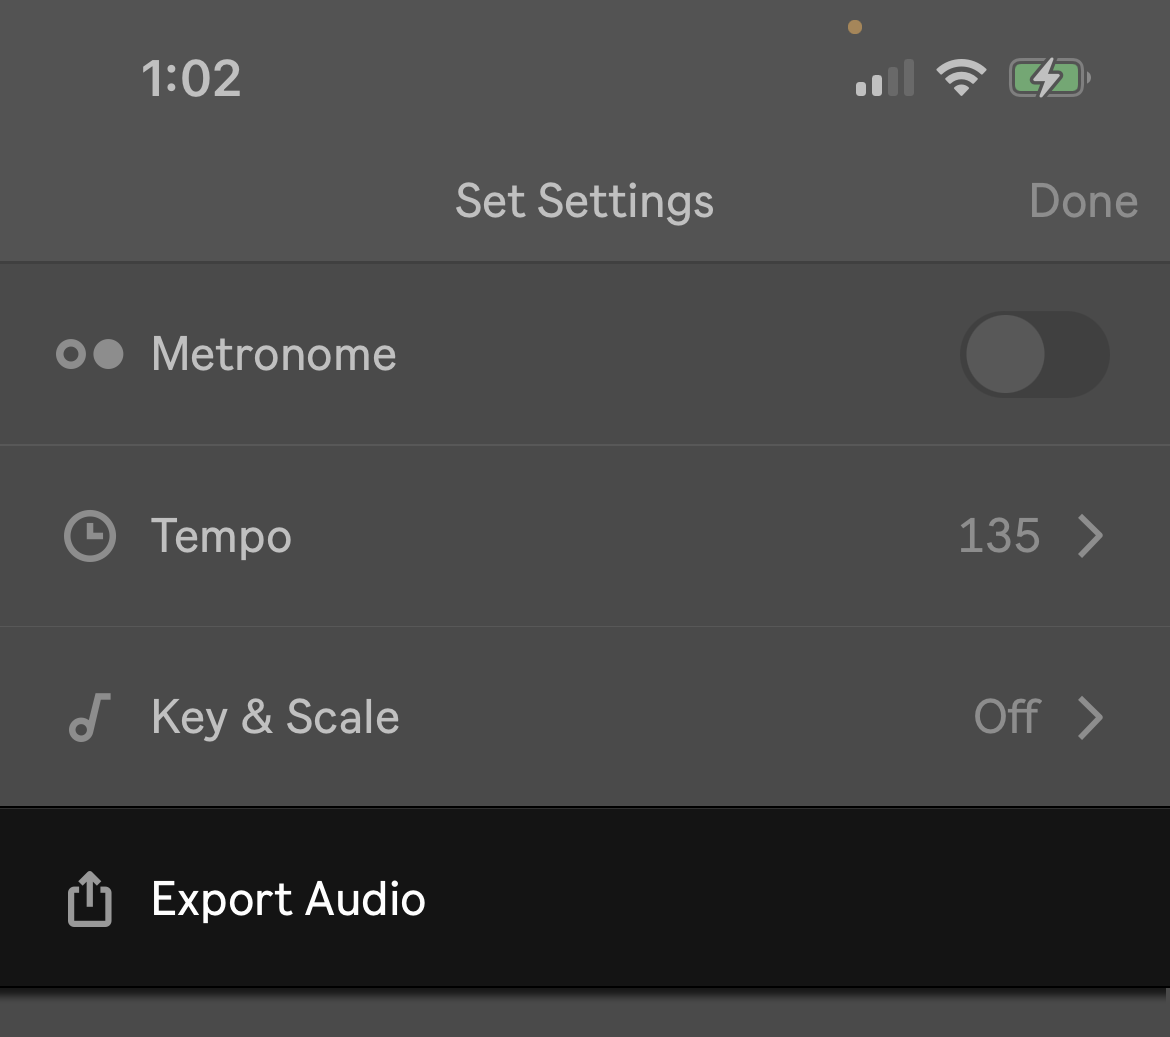 Exporter l’audio depuis Note.